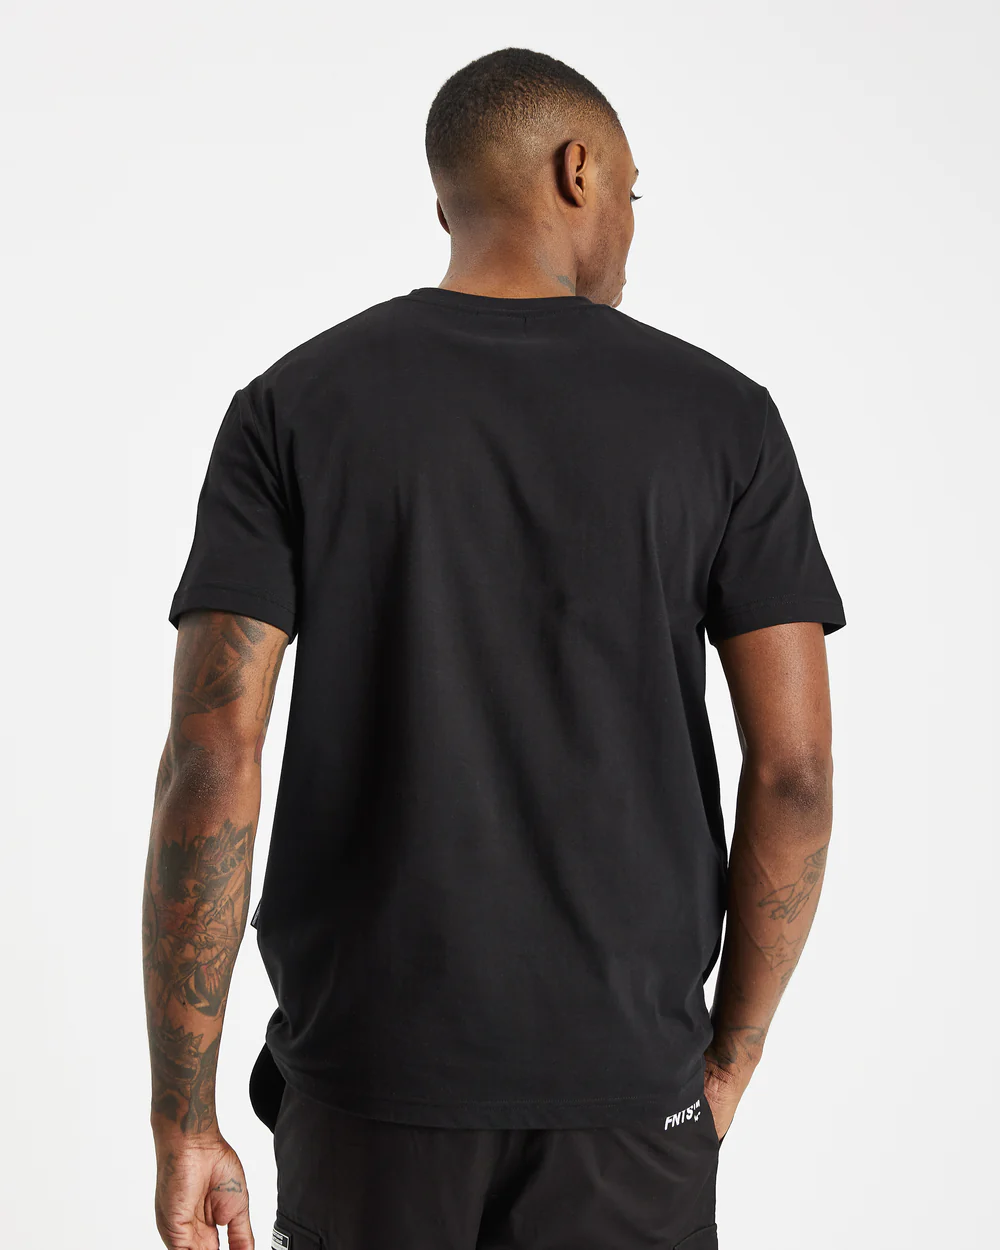 Hoodrich OG Fighter T-Shirt Black - Urban Menswear